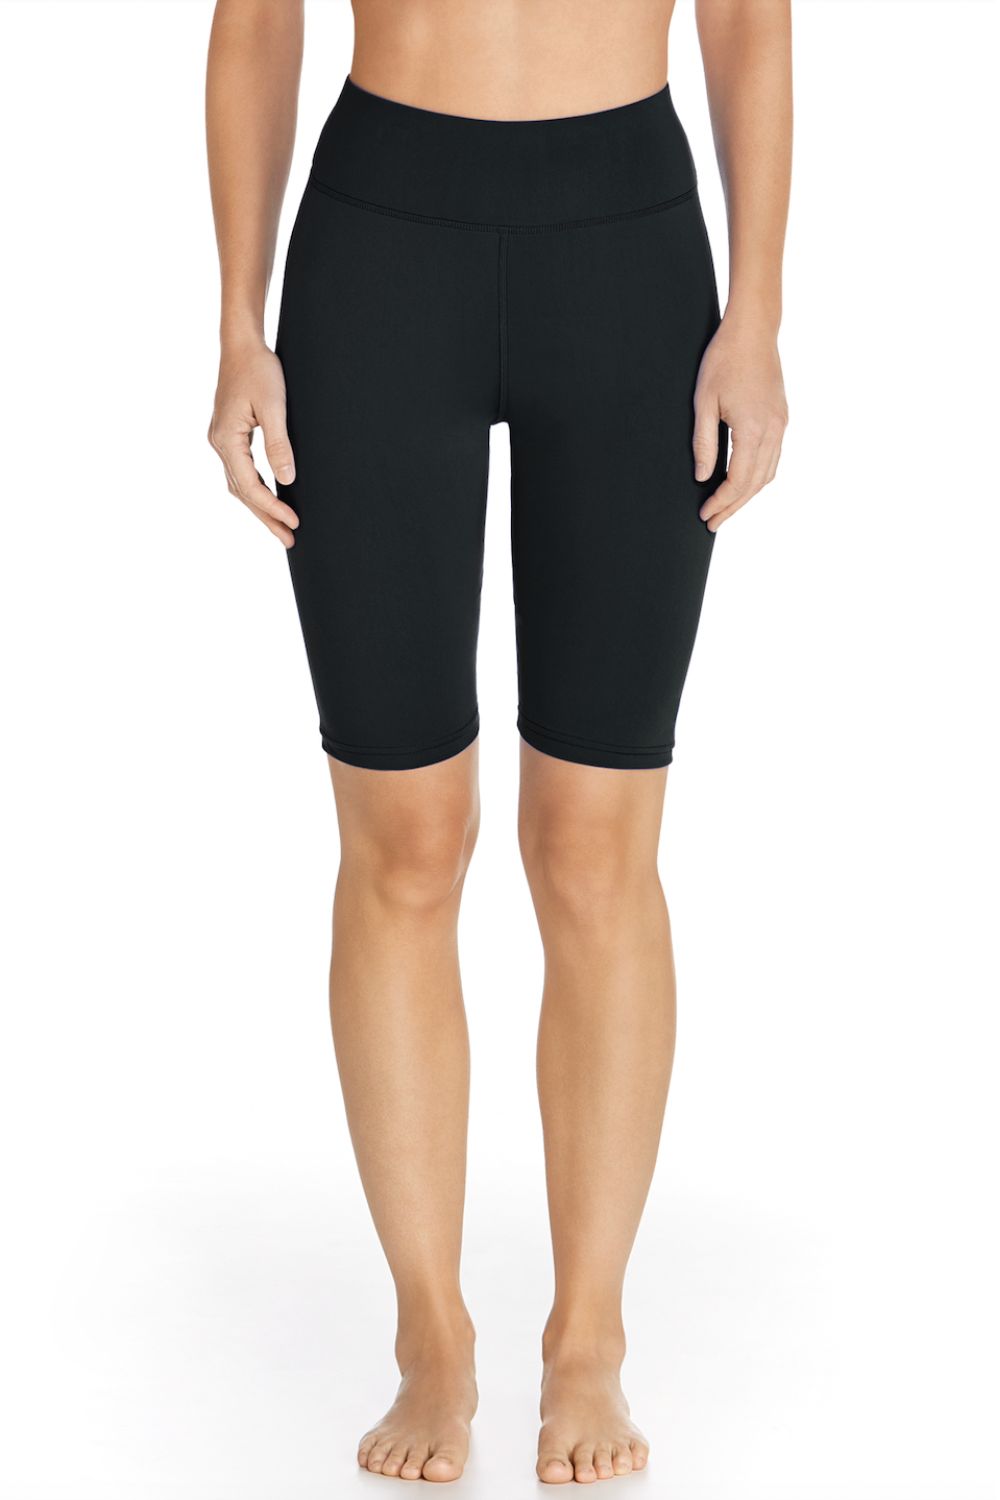 Women's UV protection swim shorts - Deep Water - Coolibar - UPF 50